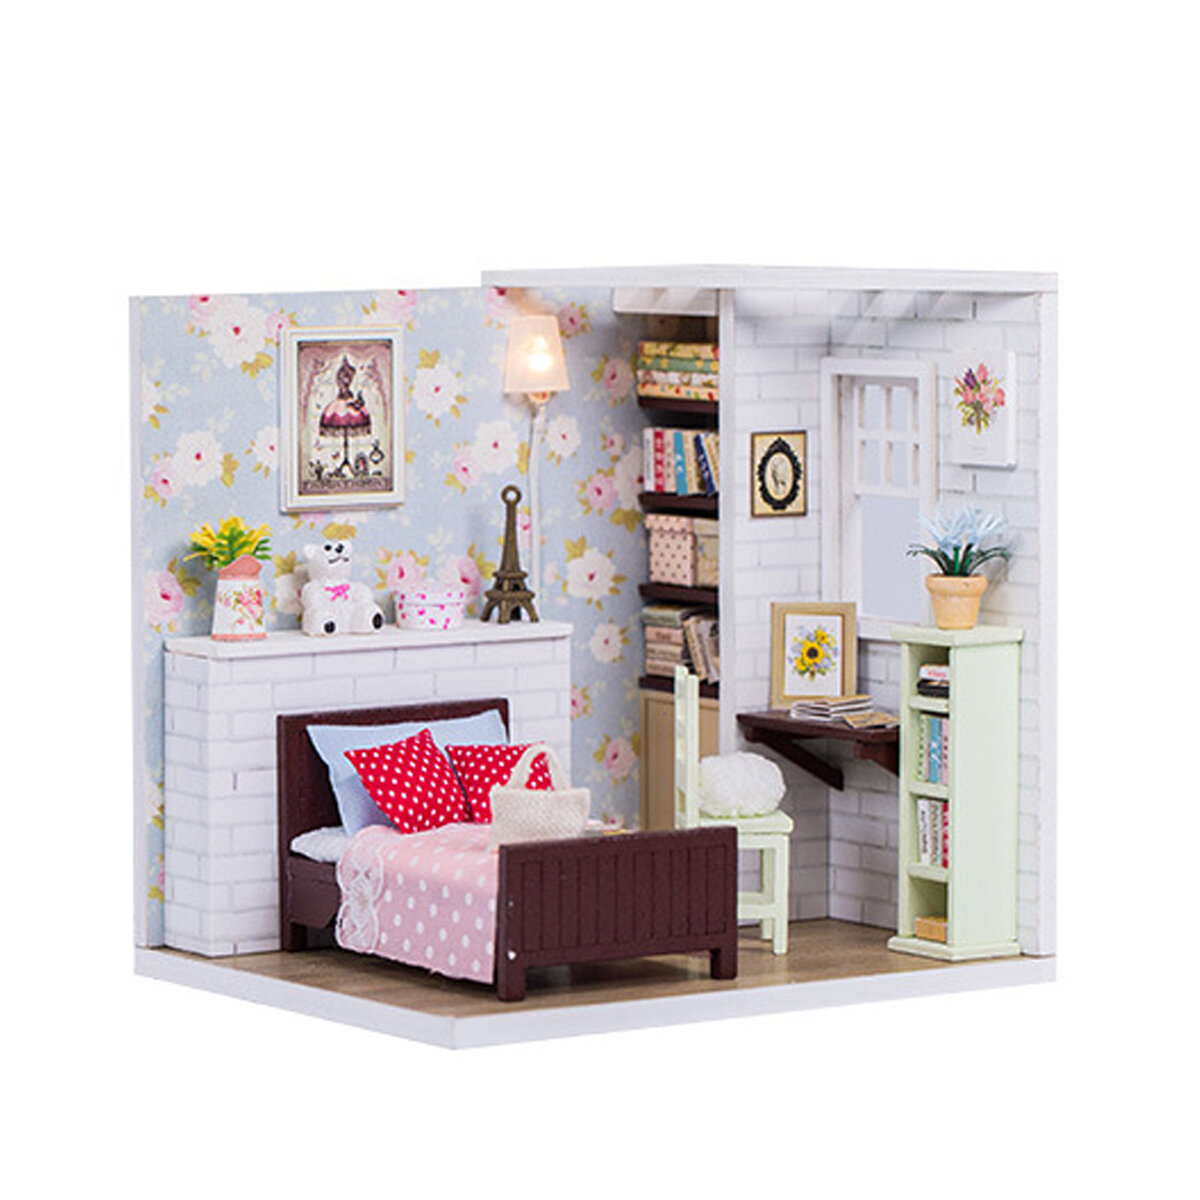 DIY Mini Dollhouse Princess Girls House Wooden Furniture Kit Handmade Miniature House Creative Assem